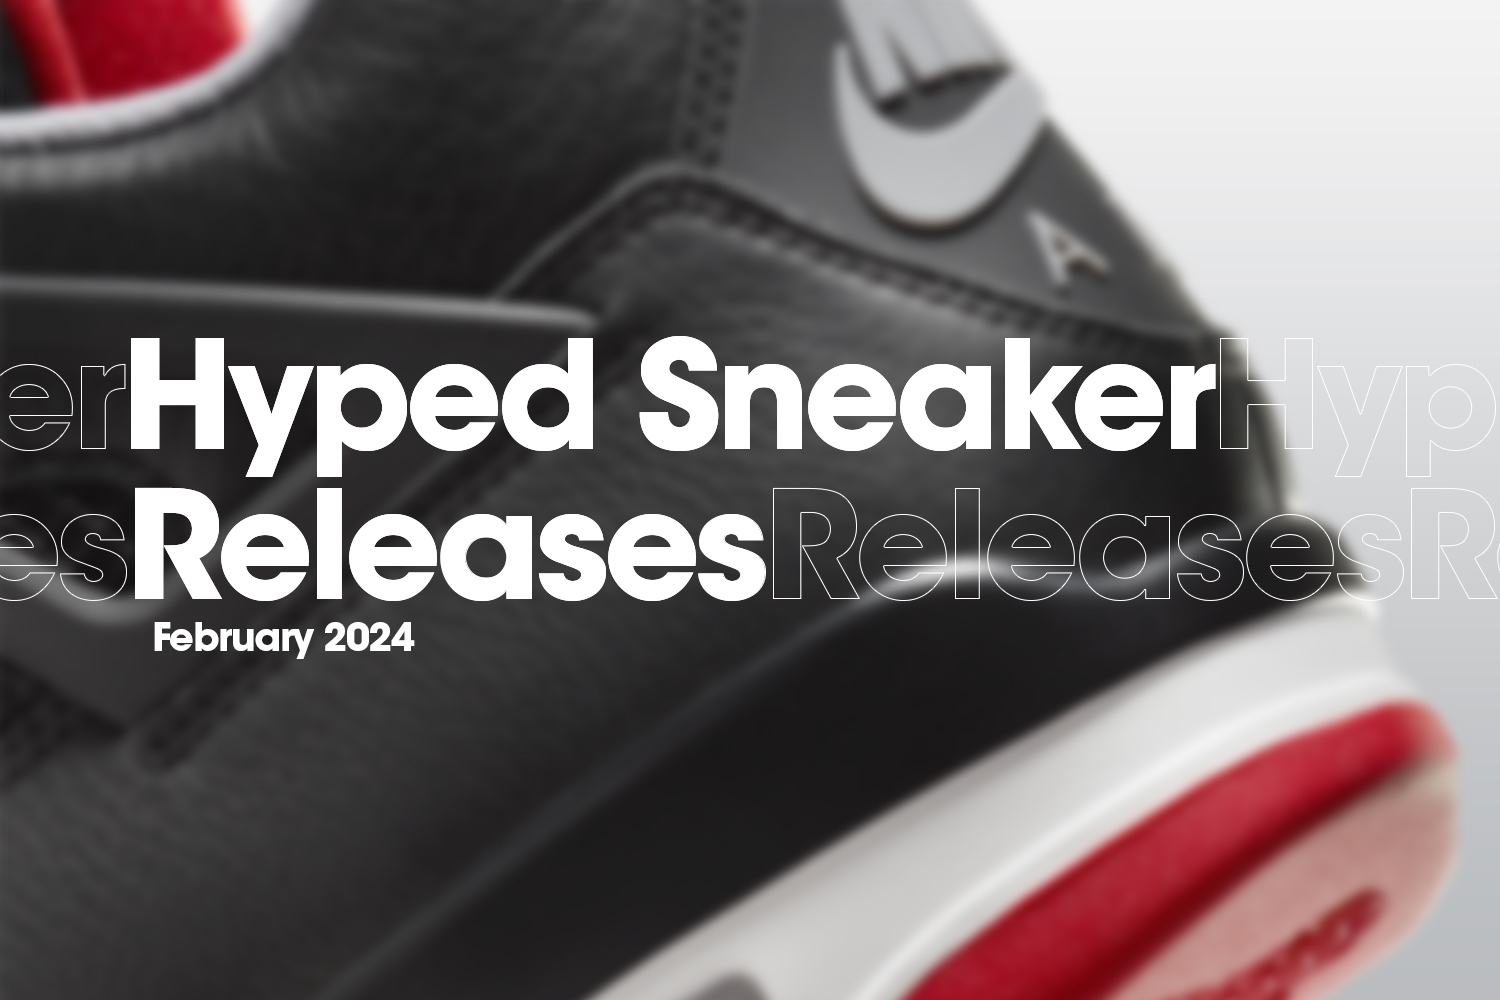 Hyped Sneaker Releases van februari 2024